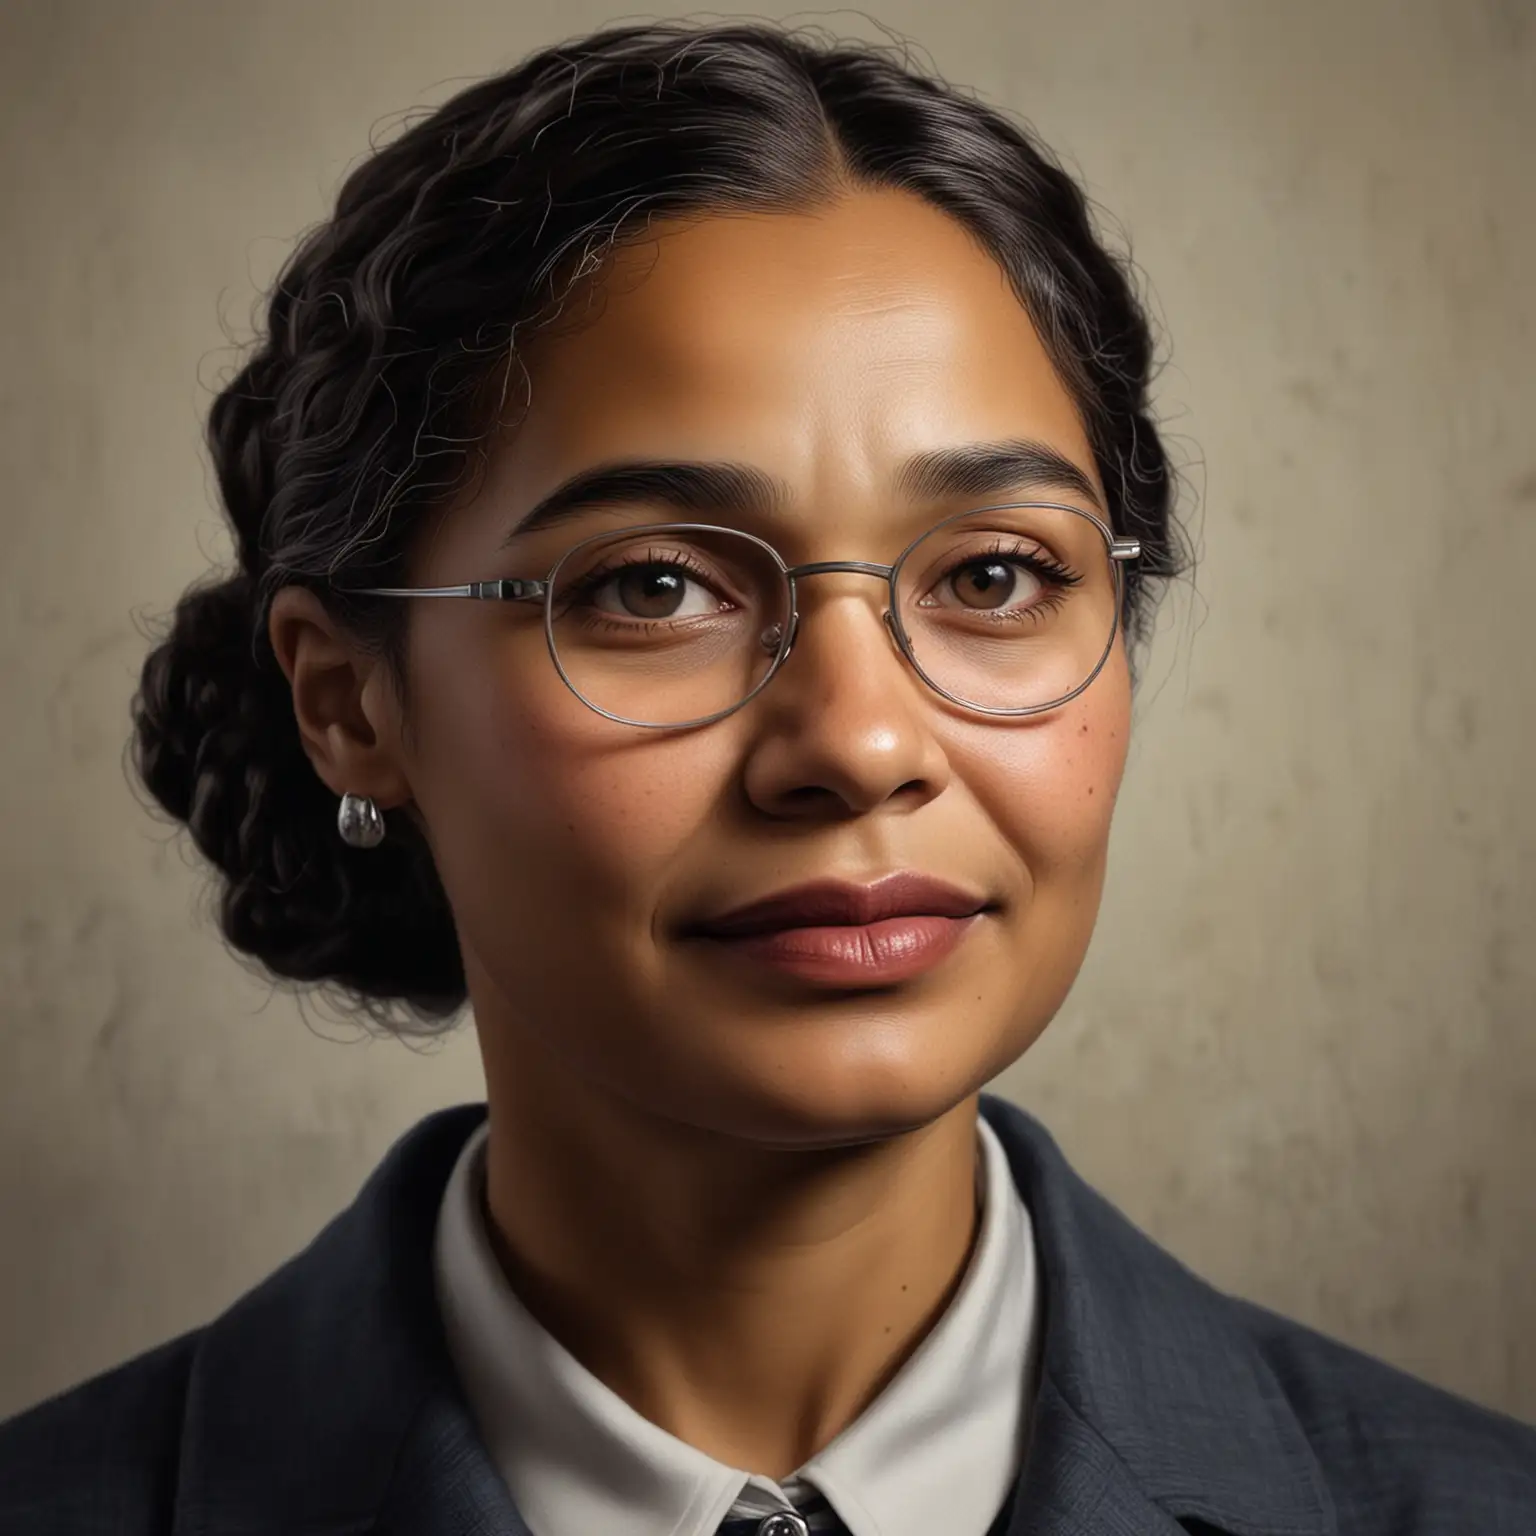 Realistic-Portrait-of-Rosa-Parks-Civil-Rights-Icon